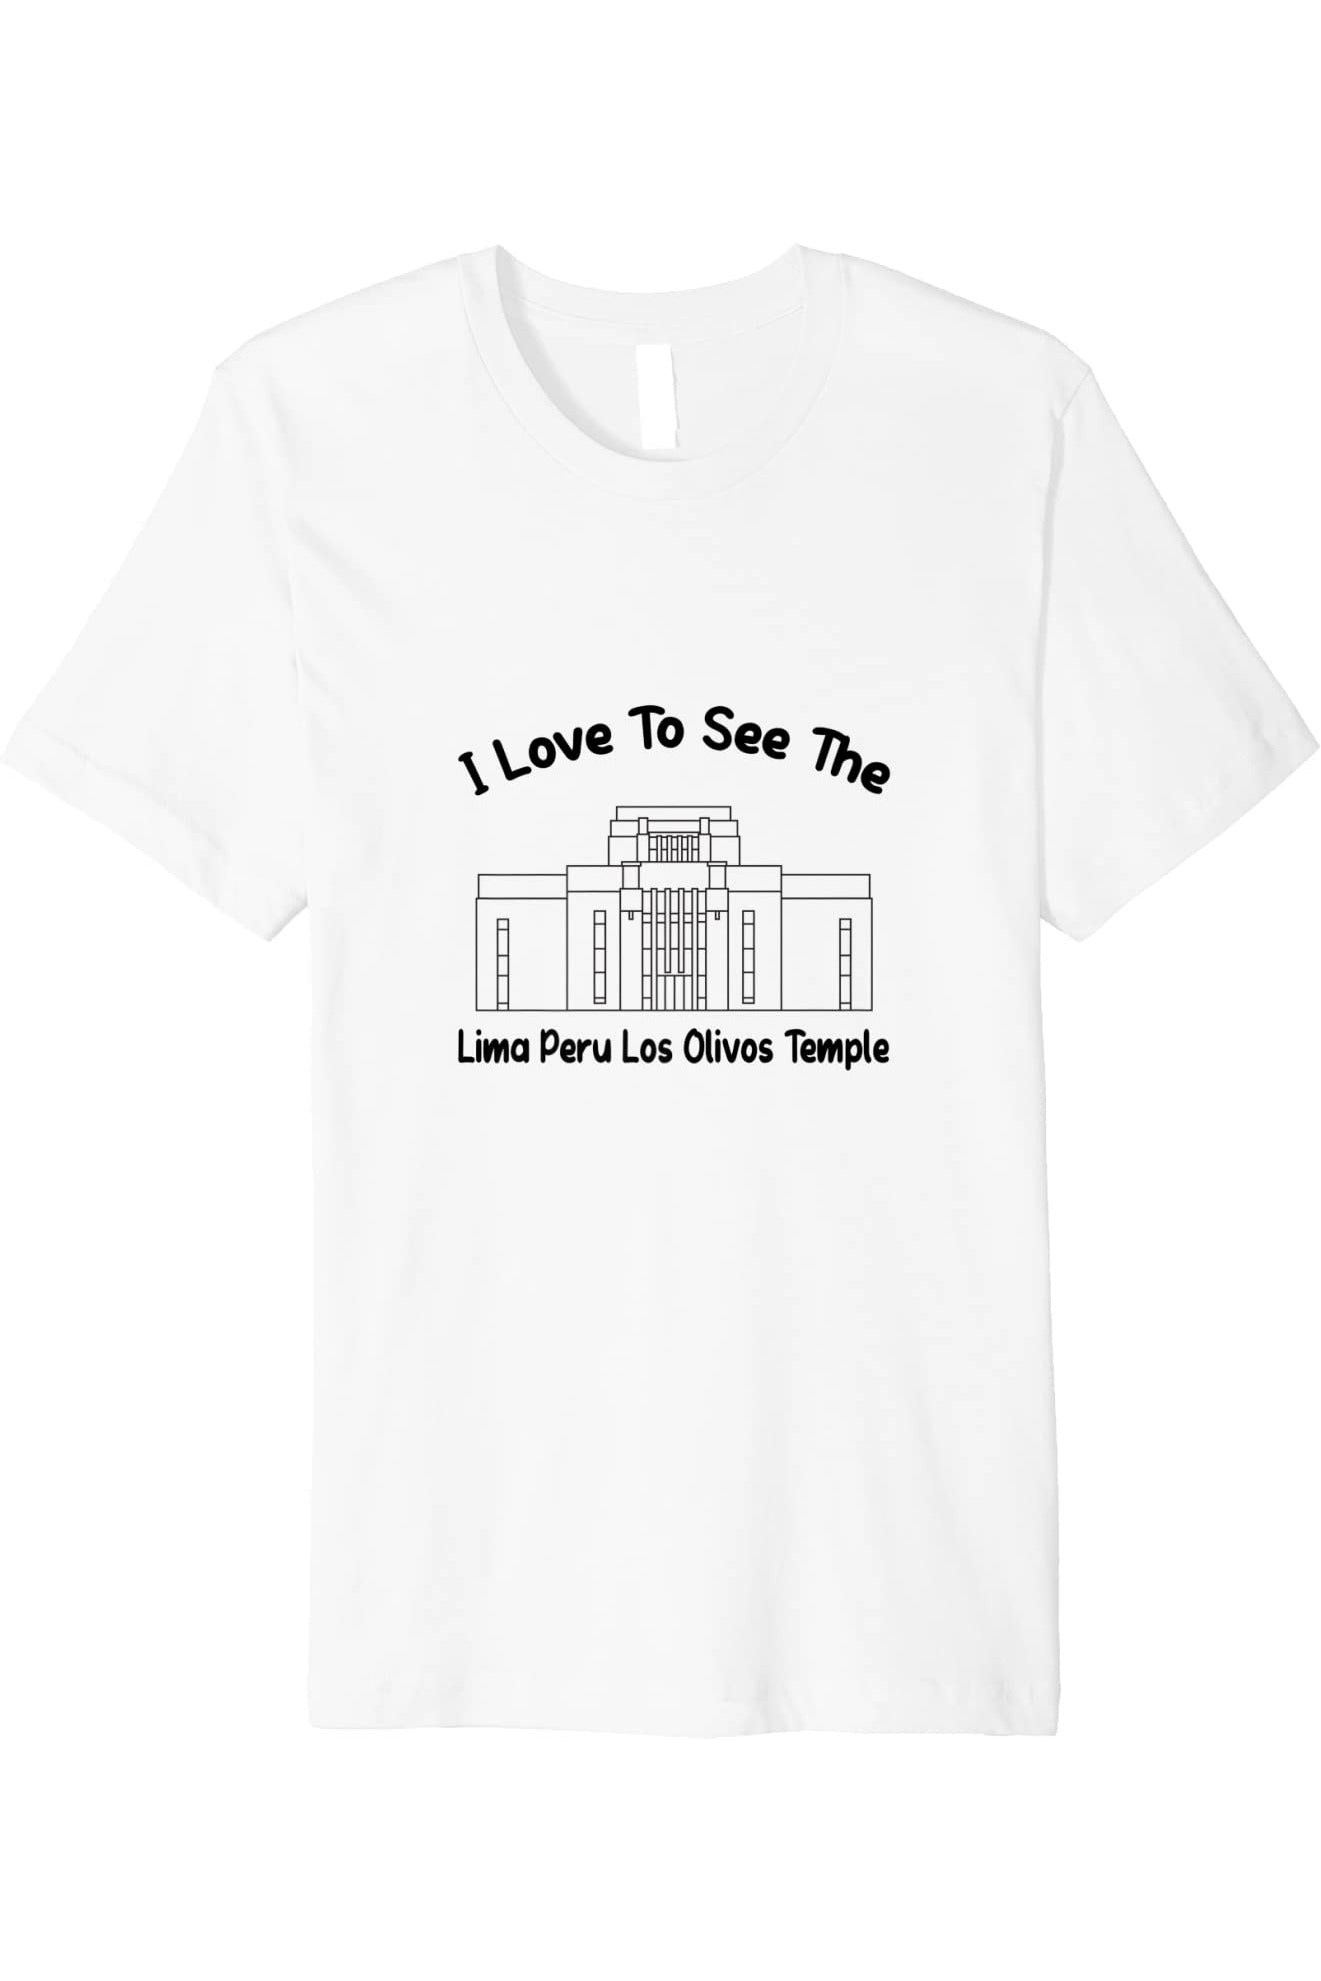 Lima Peru Los Olivos Temple T-Shirt - Premium - Primary Style (English) US